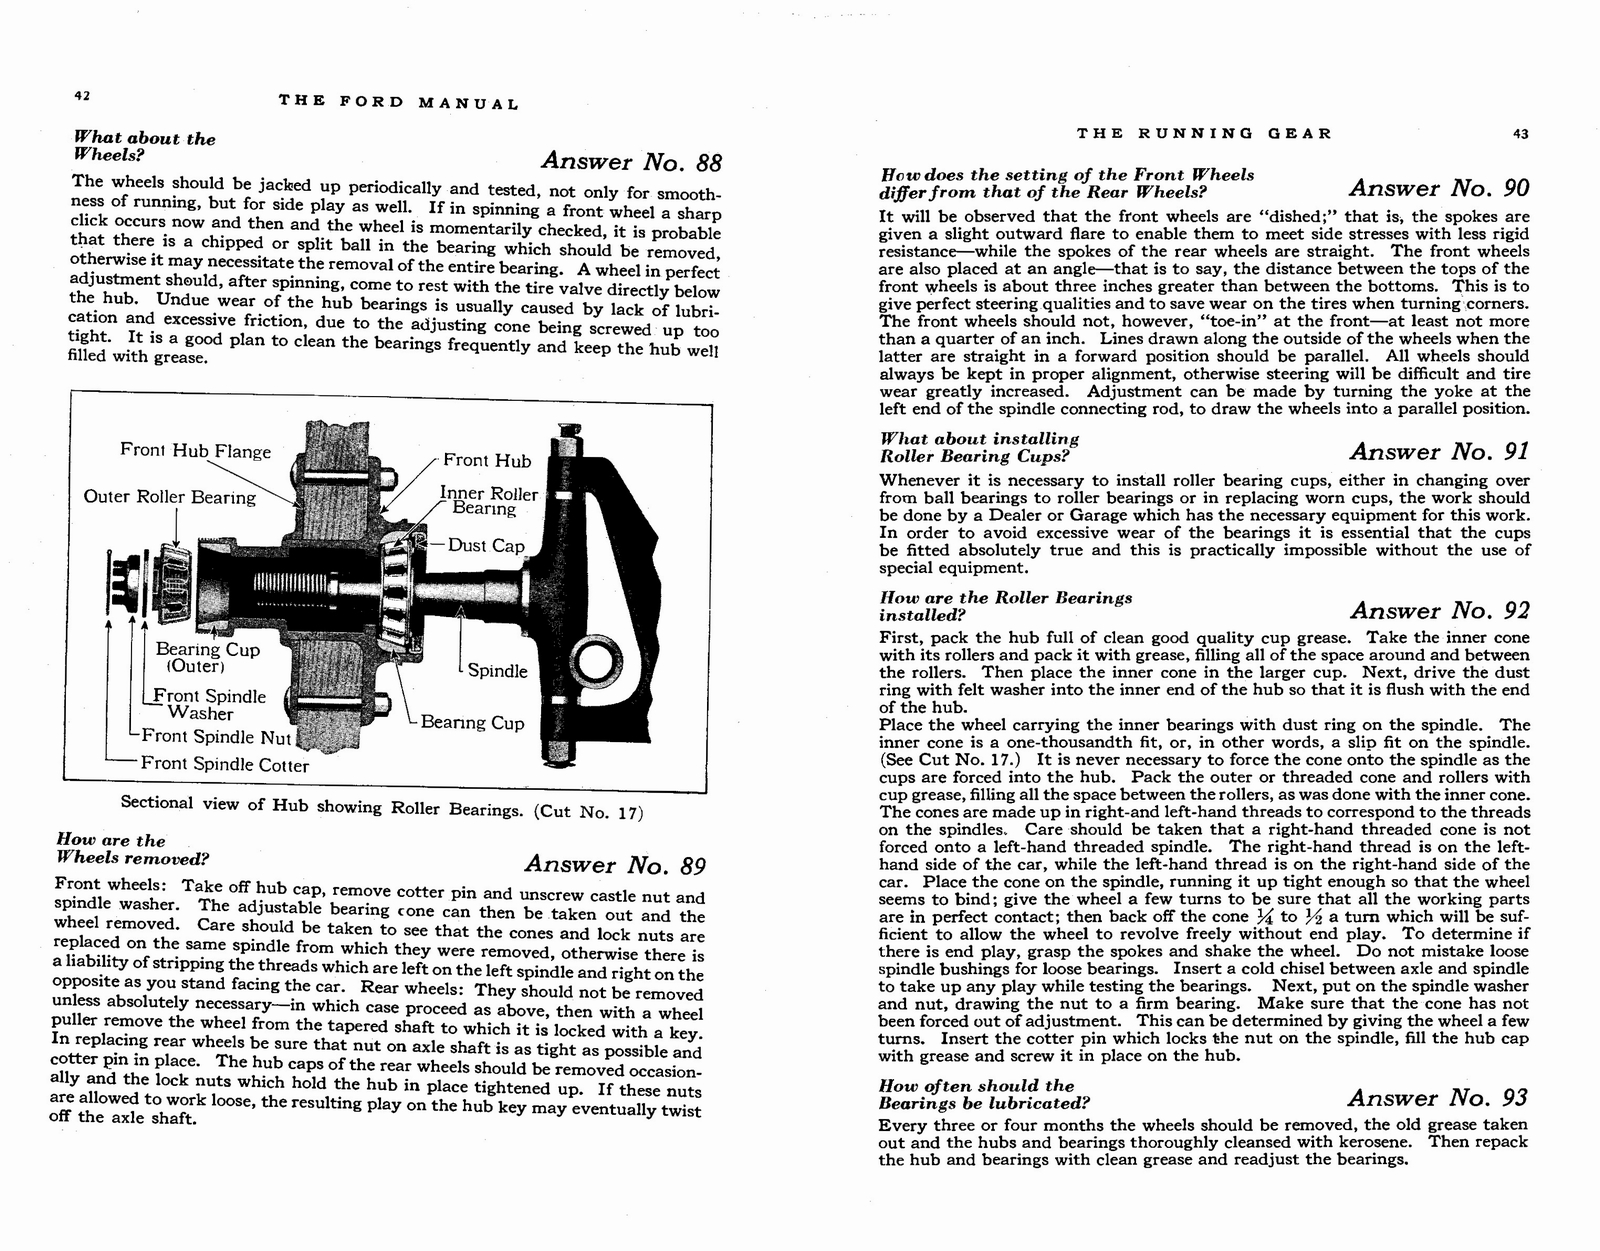 n_1925 Ford Owners Manual-42-43.jpg